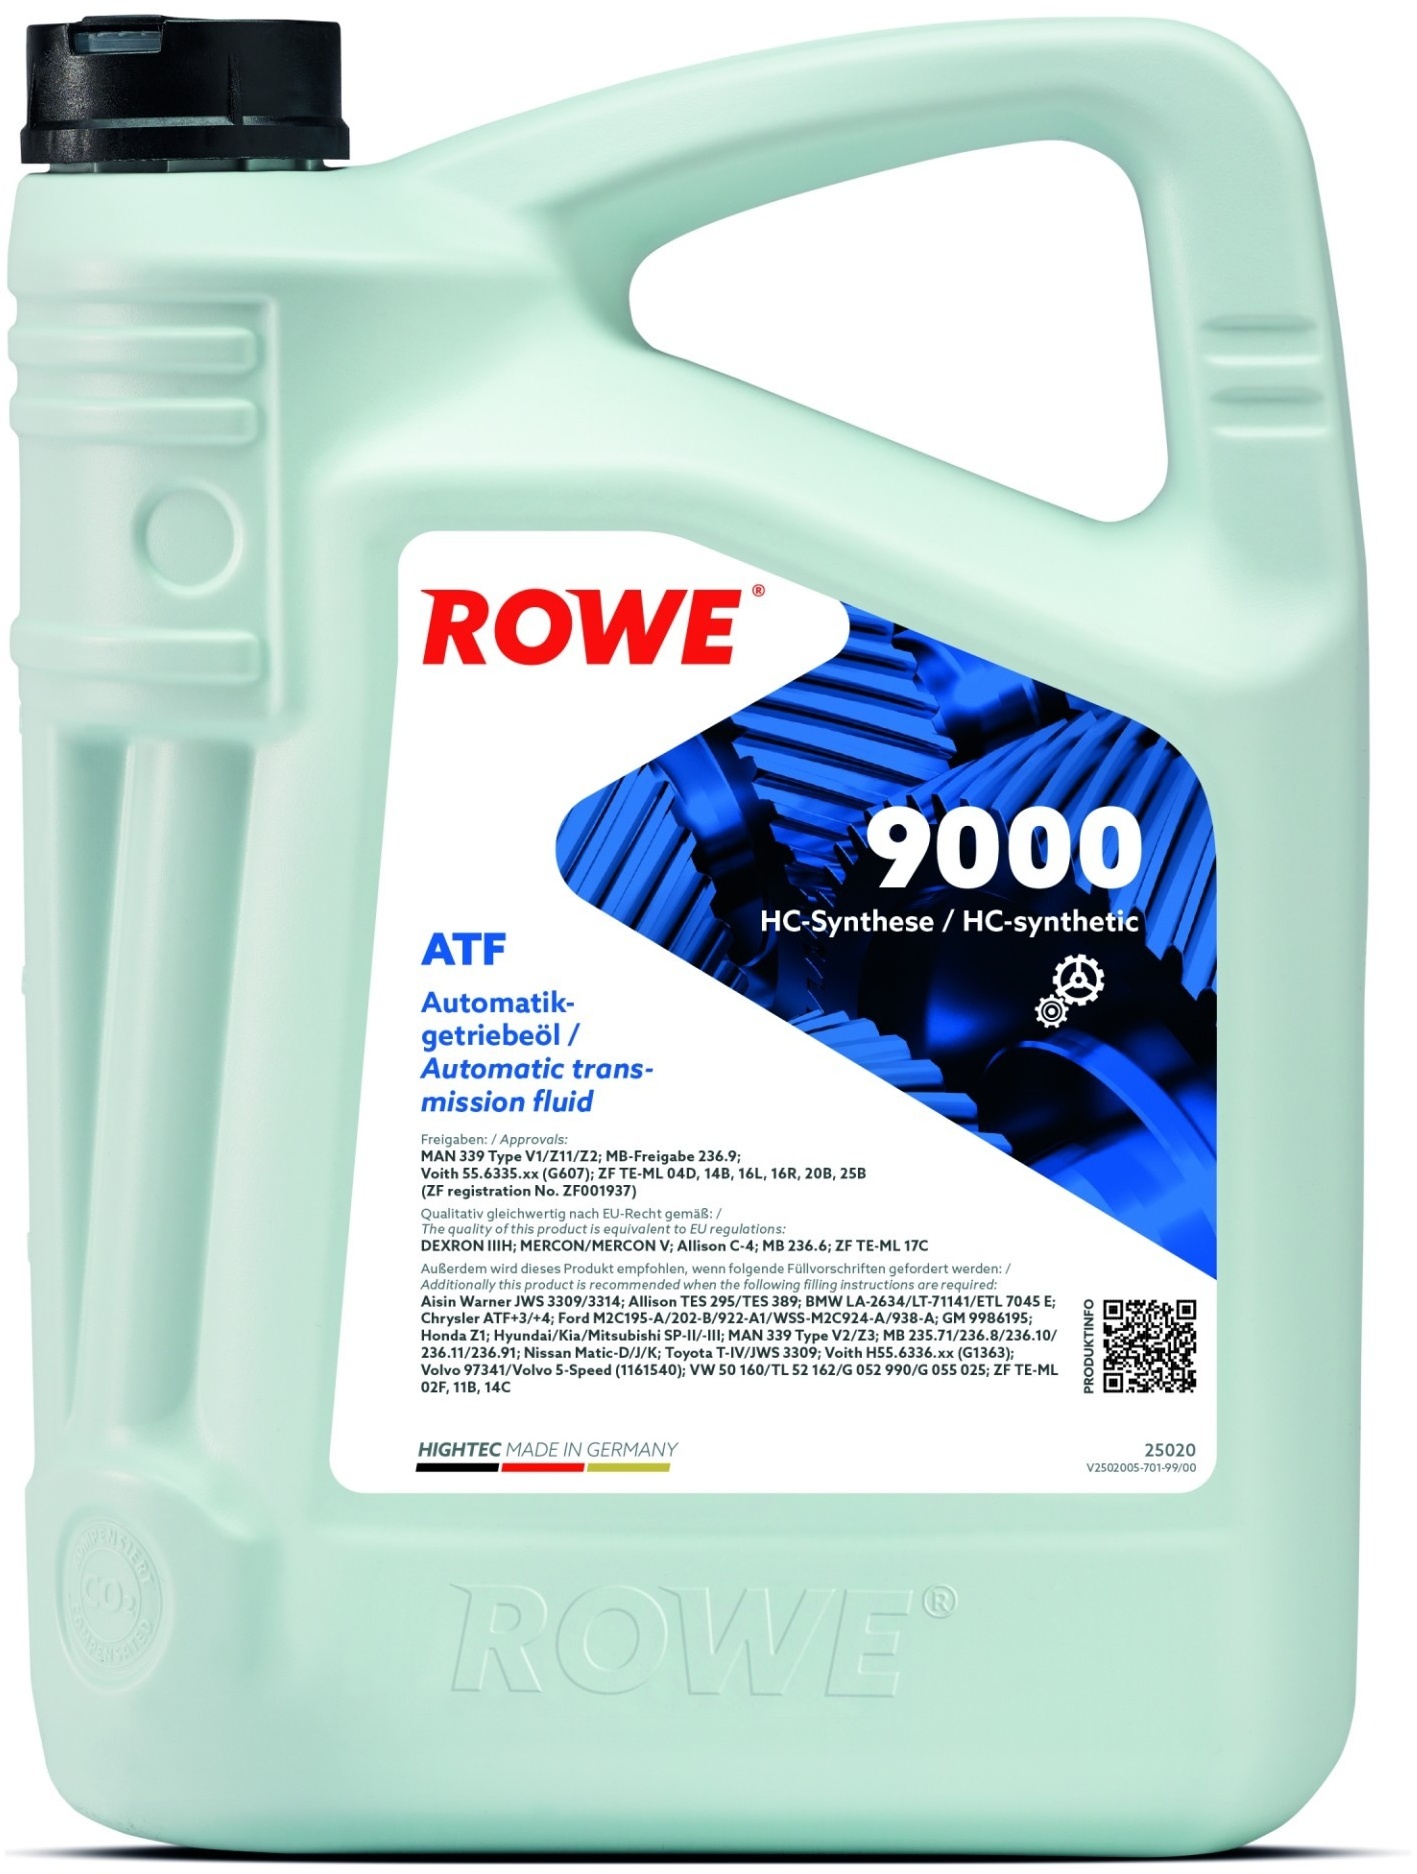 ROWE HIGHTEC ATF 9000 (25020) Teilsynthetiköl 5L (25020-0050-99)